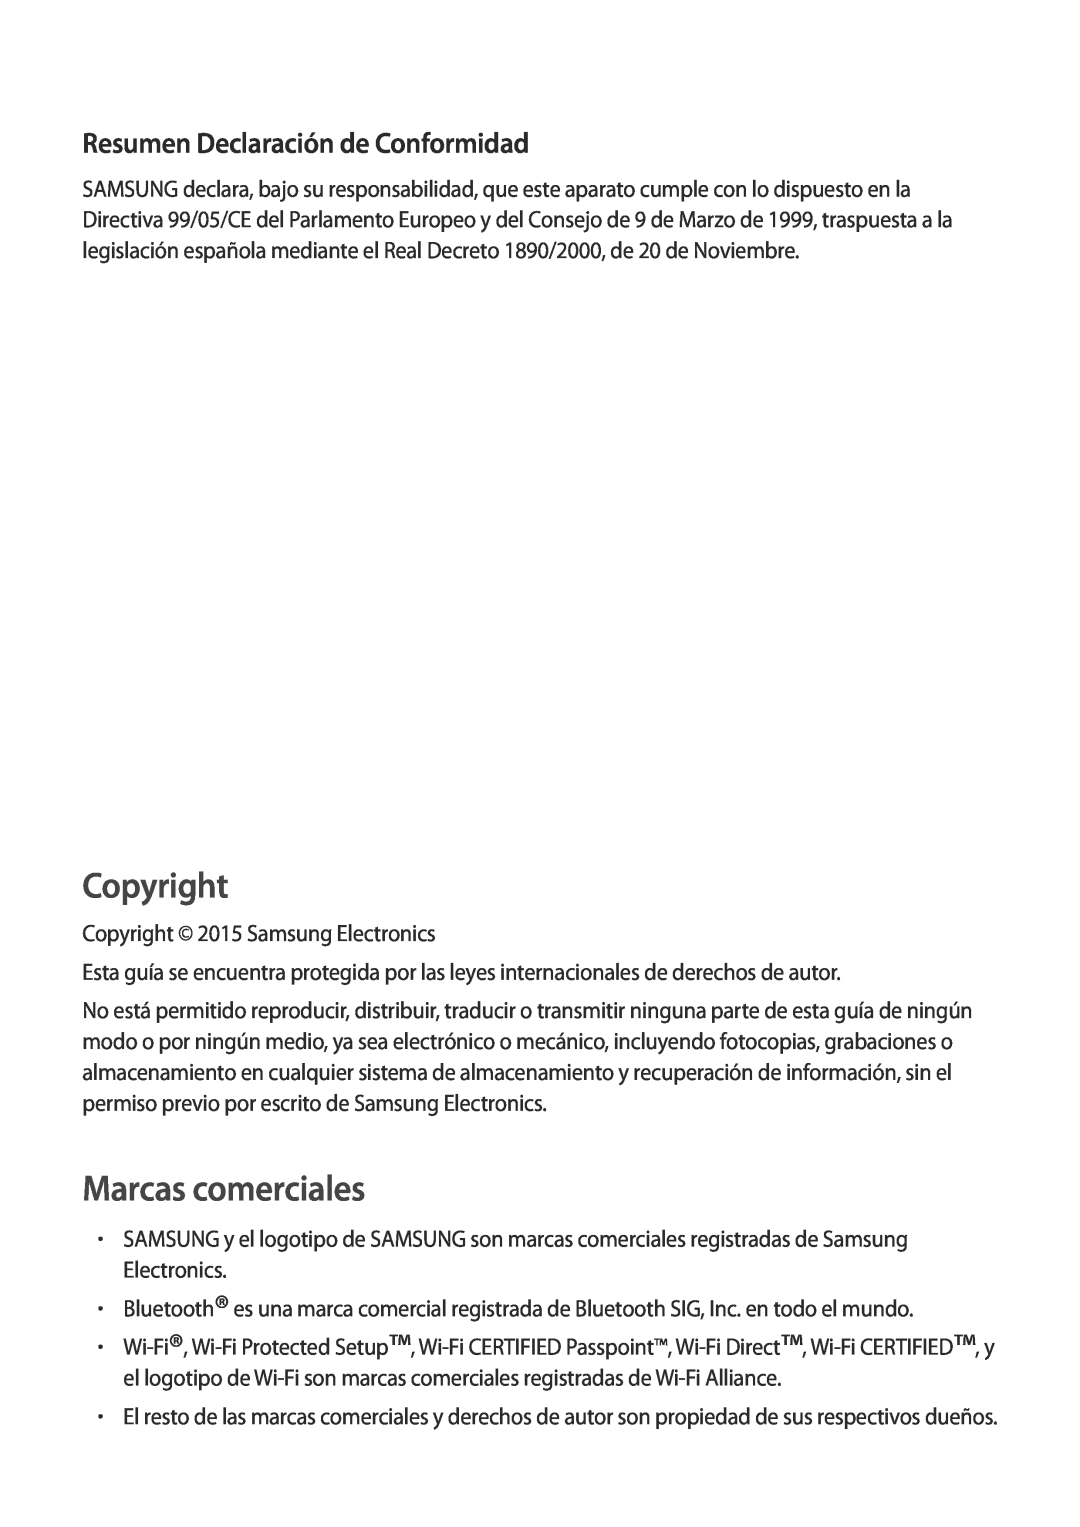 Samsung SM-A500FZSUPHE, SM-A500FZDUPHE, SM-A500FZKUPHE Resumen Declaración de Conformidad, Copyright, Marcas comerciales 